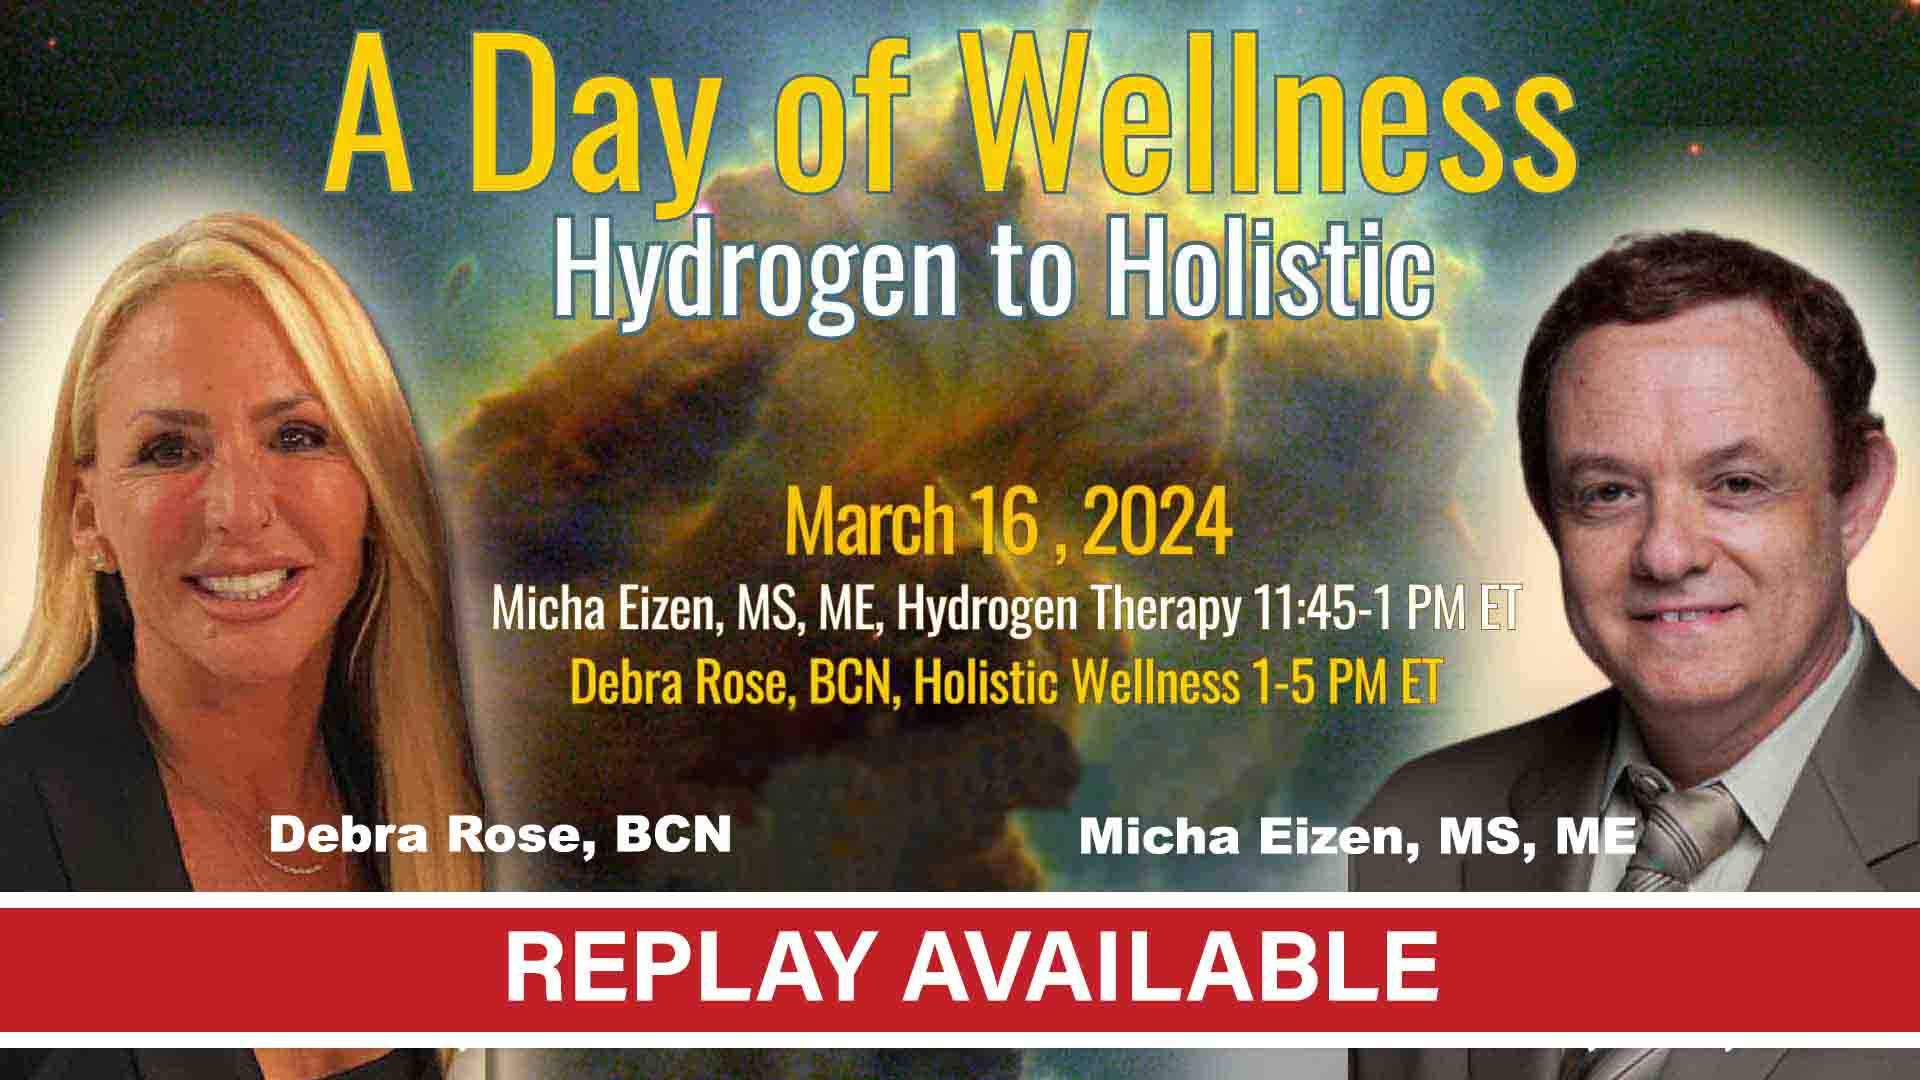 Debra Rose Micha Eizen Day of Wellness replay available